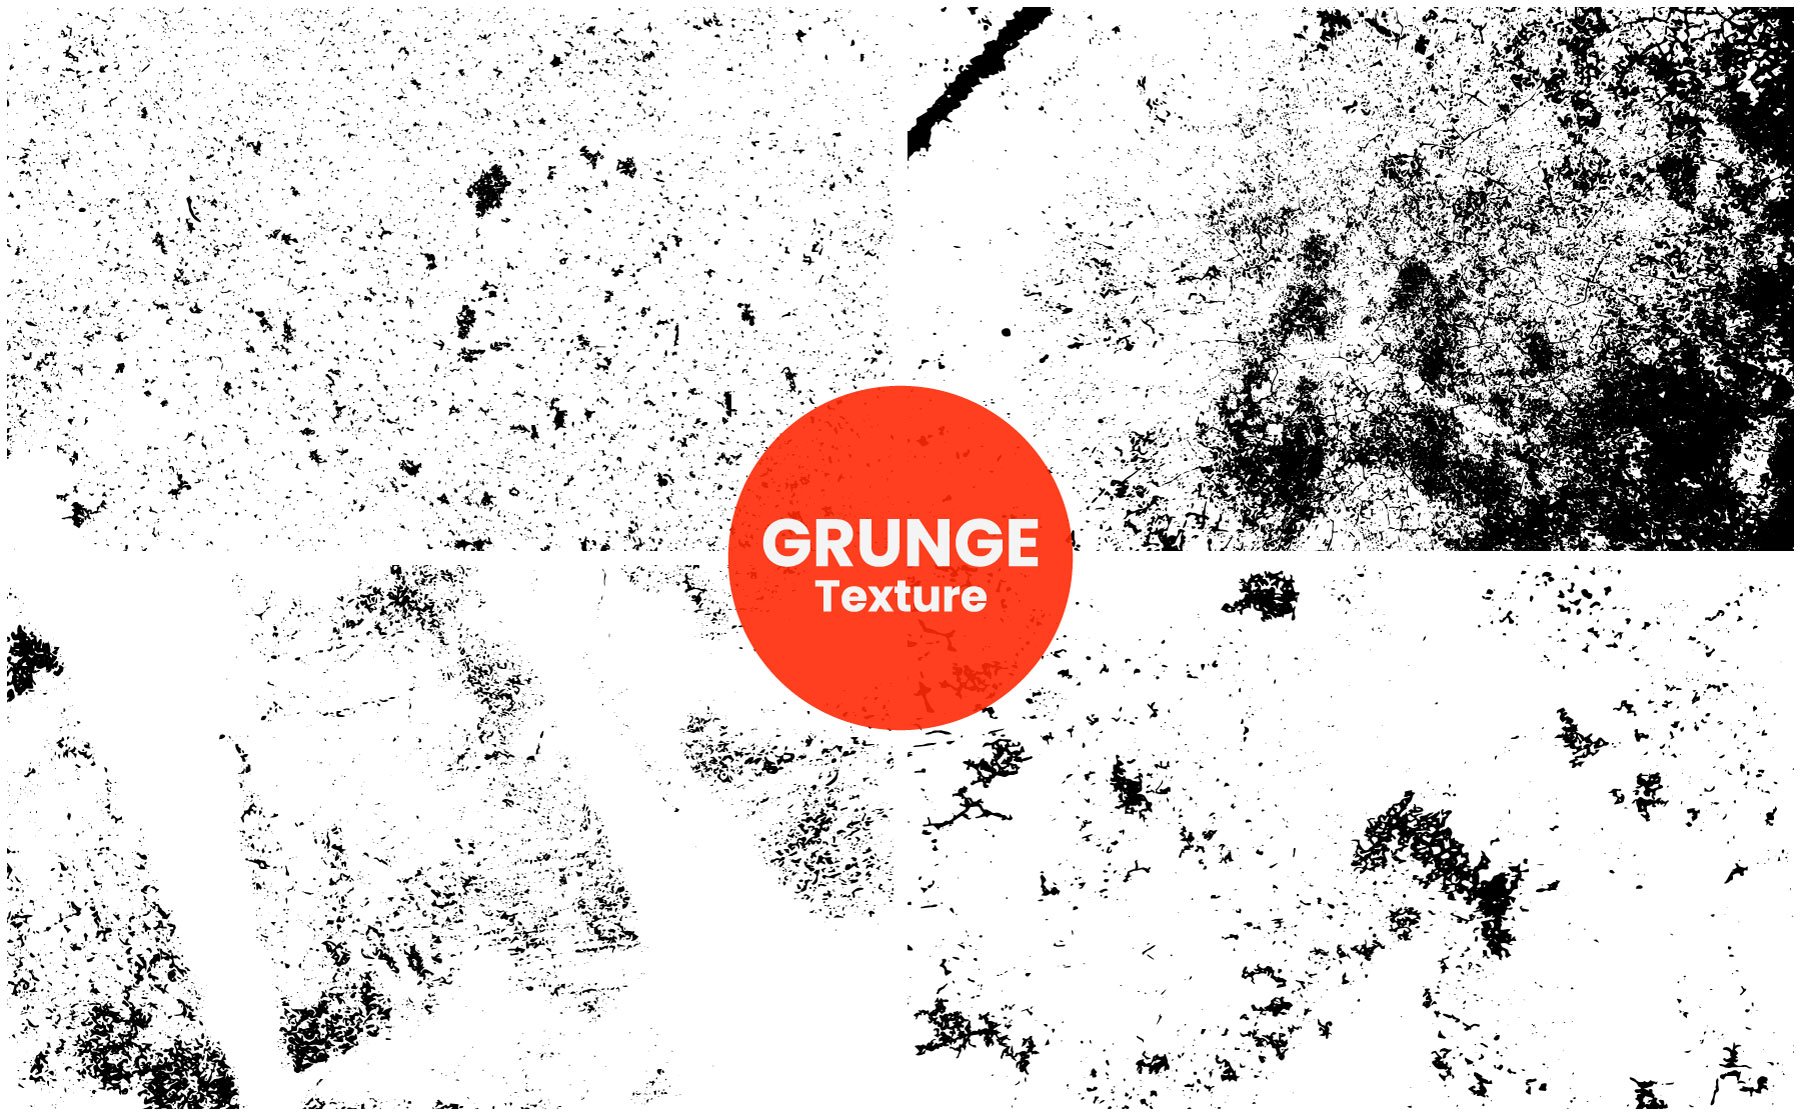 Vintage Grunge texture bundle preview image.